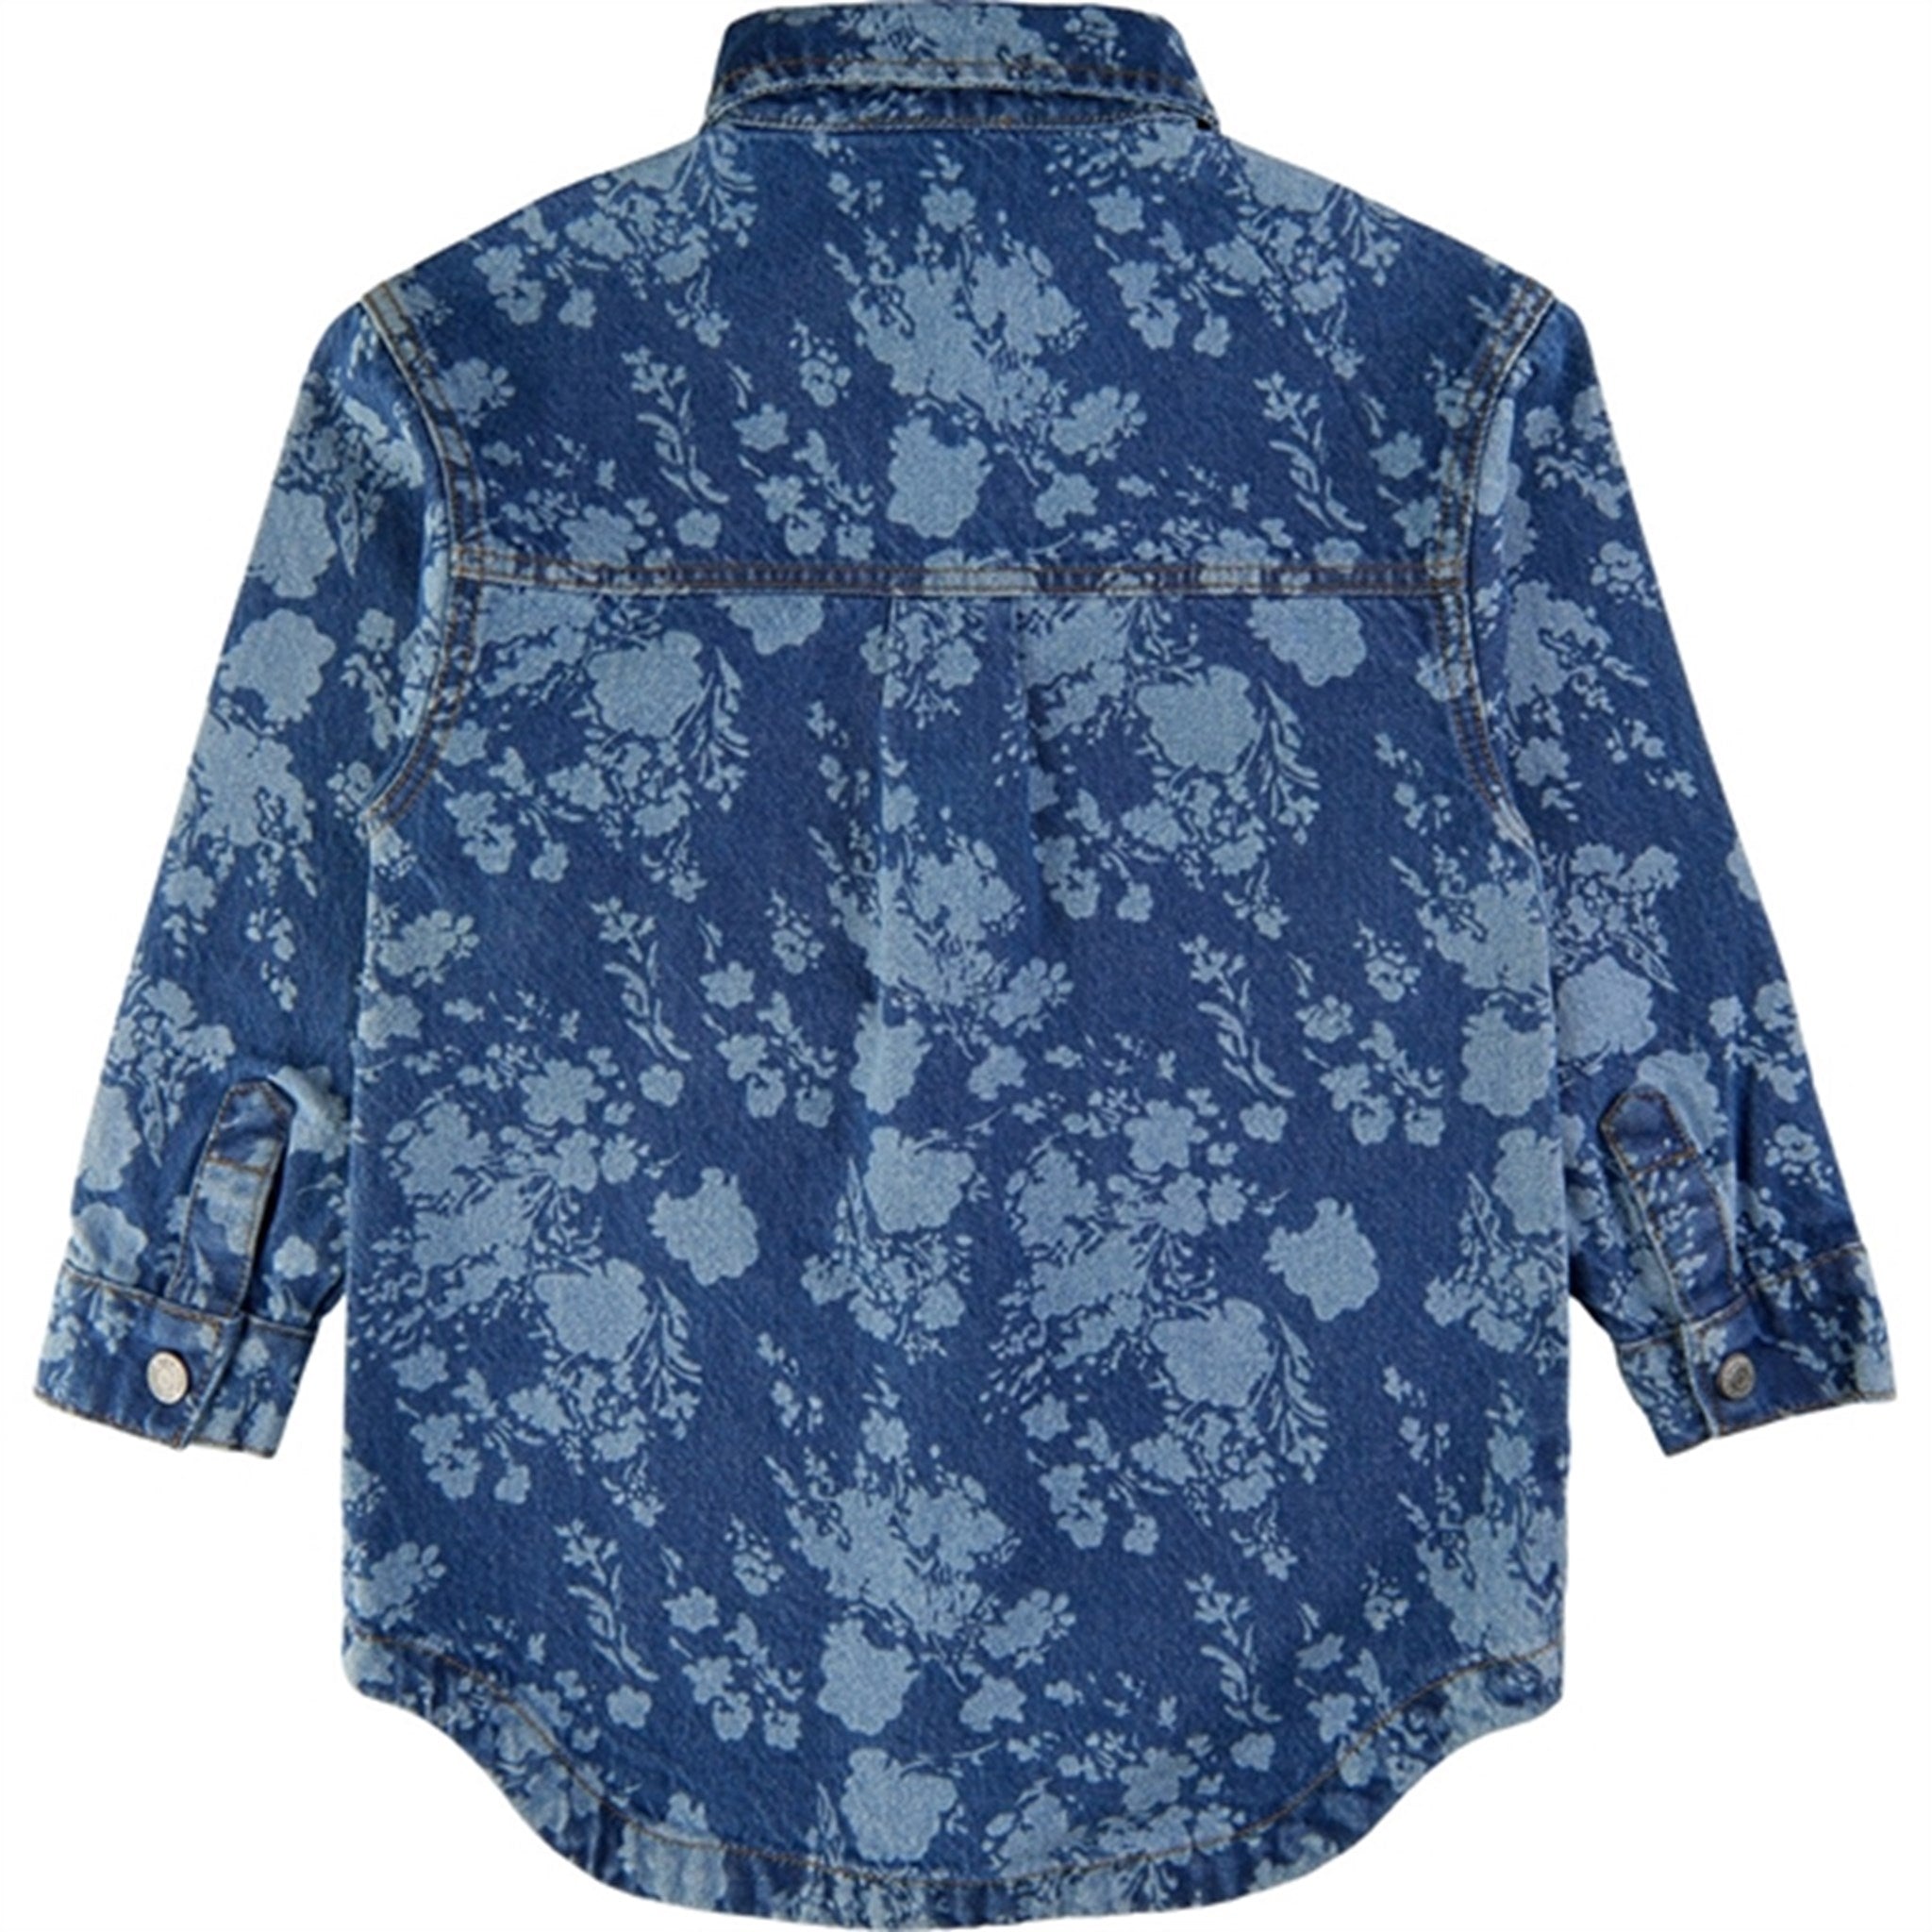 THE NEW Blue Denim Florana Denim Shirt 4